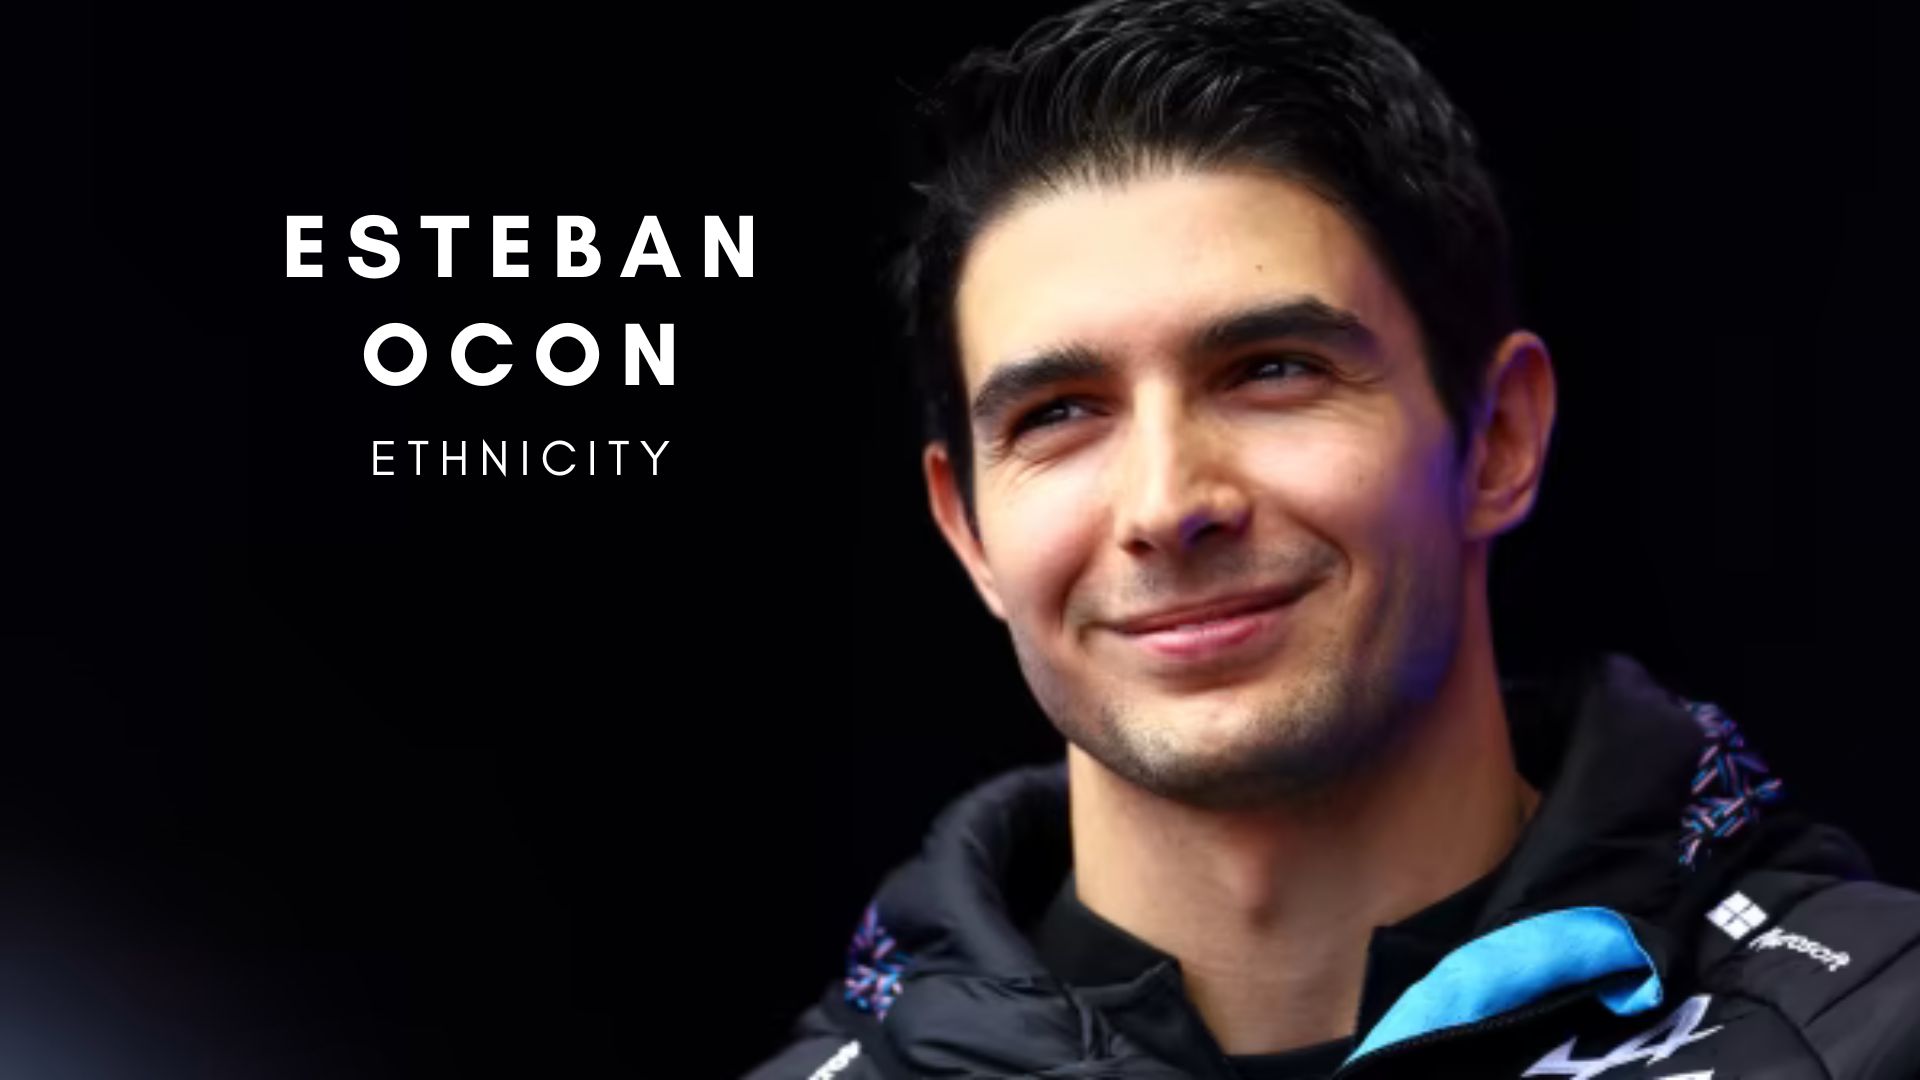 Esteban Ocon ethnicity